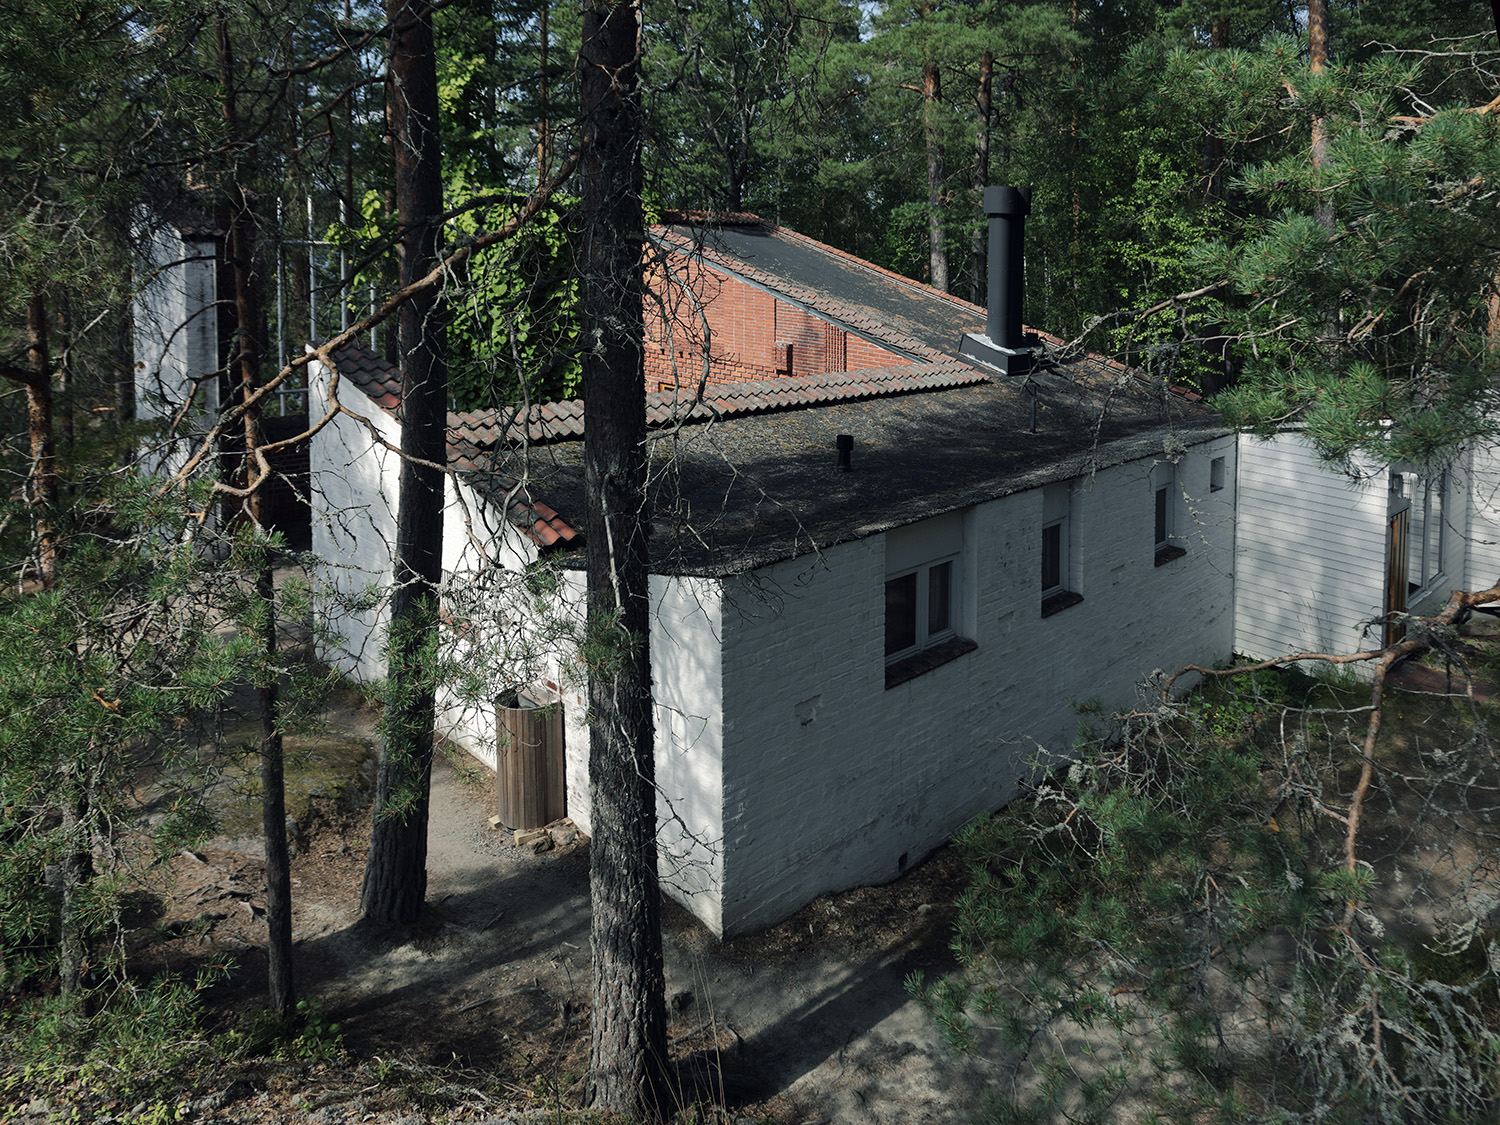 Experimental House
Alvar Aalto, 1952
Muuratsalo, Findland